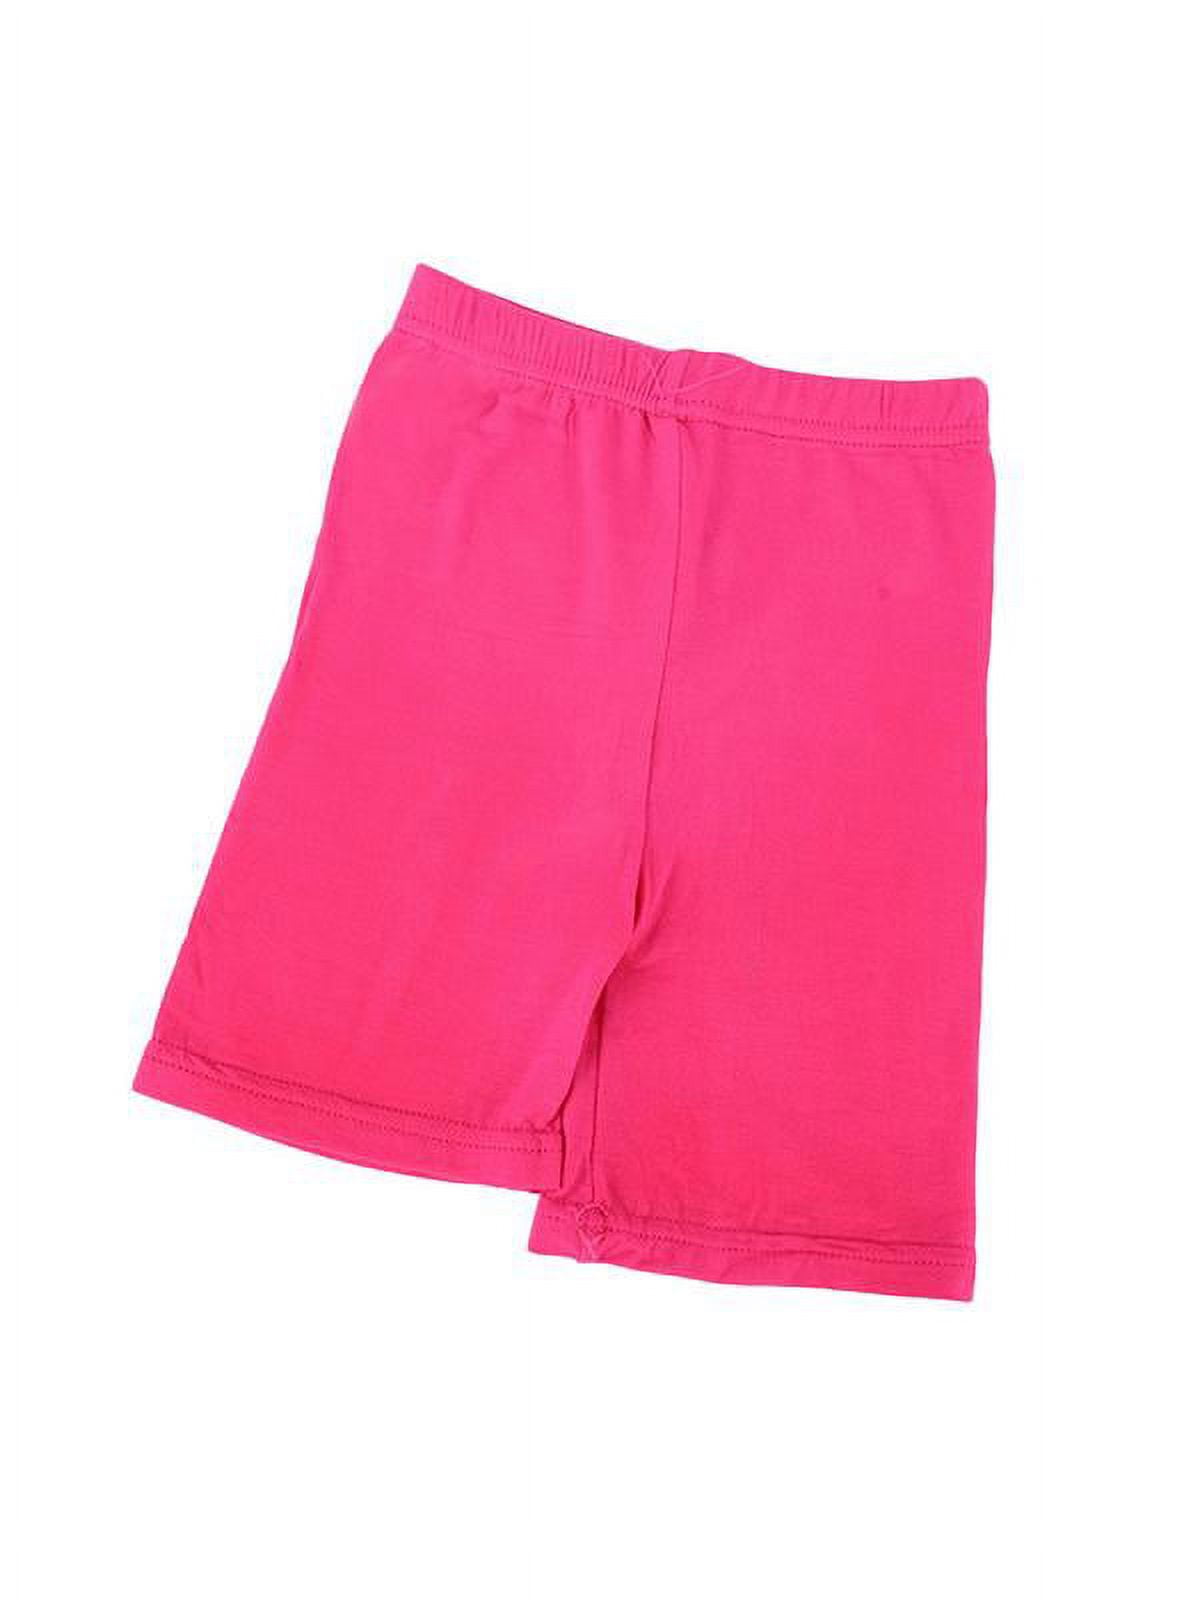 Dance Shorts Beach Pants Girls Safety Shorts Leggings Boxer Underwear  Children | eBay